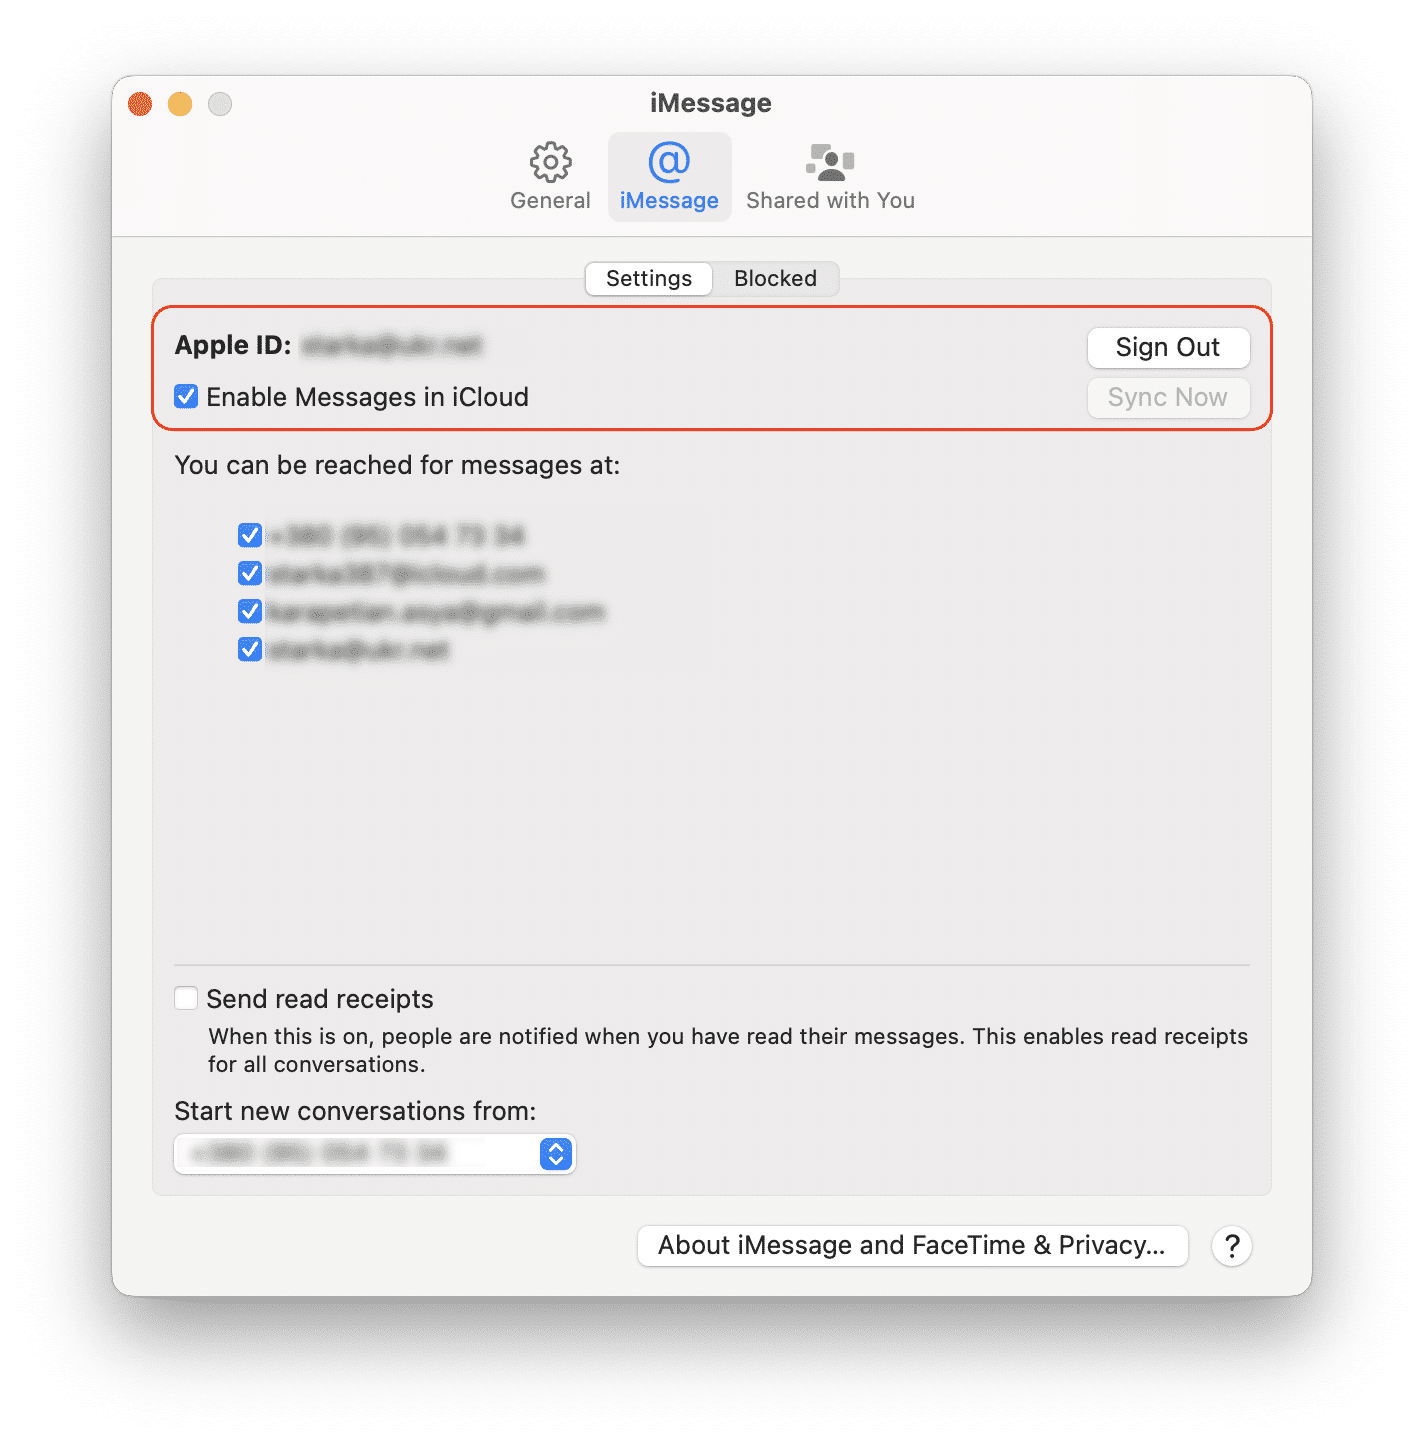 iMessage settings window